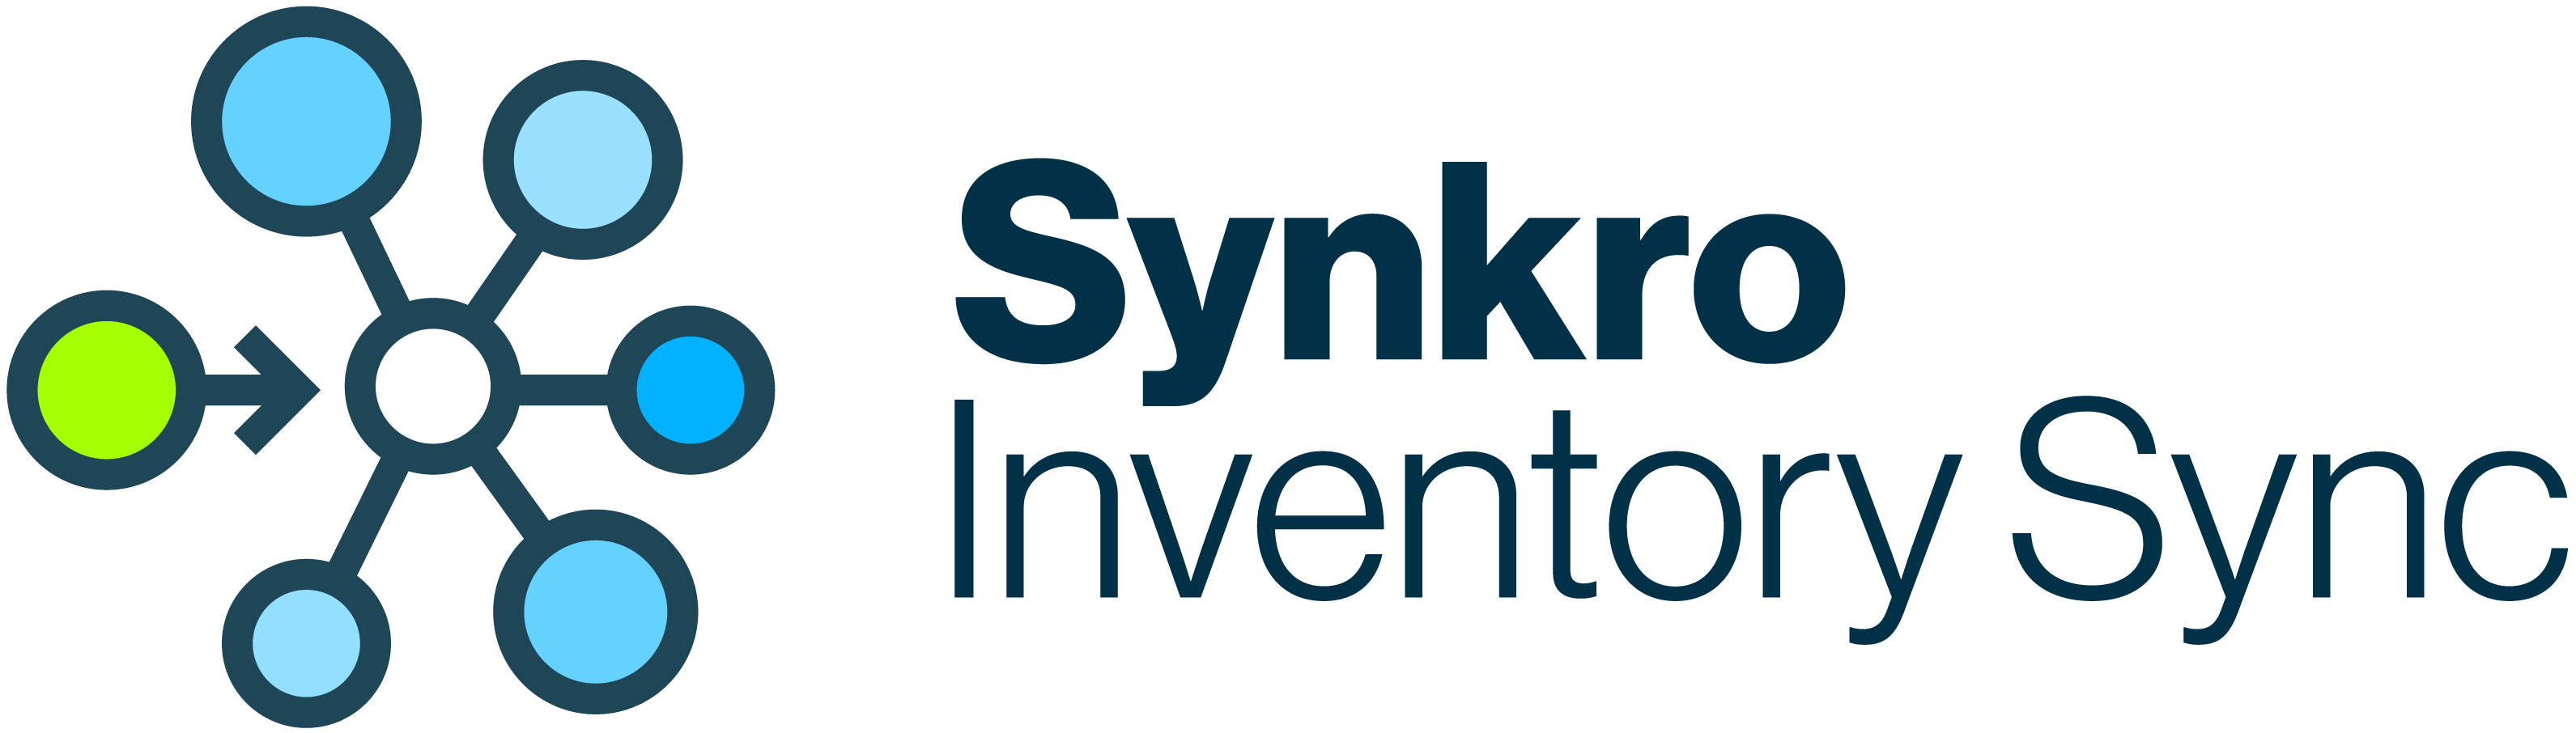 Shopfify Inventory Sync Logo